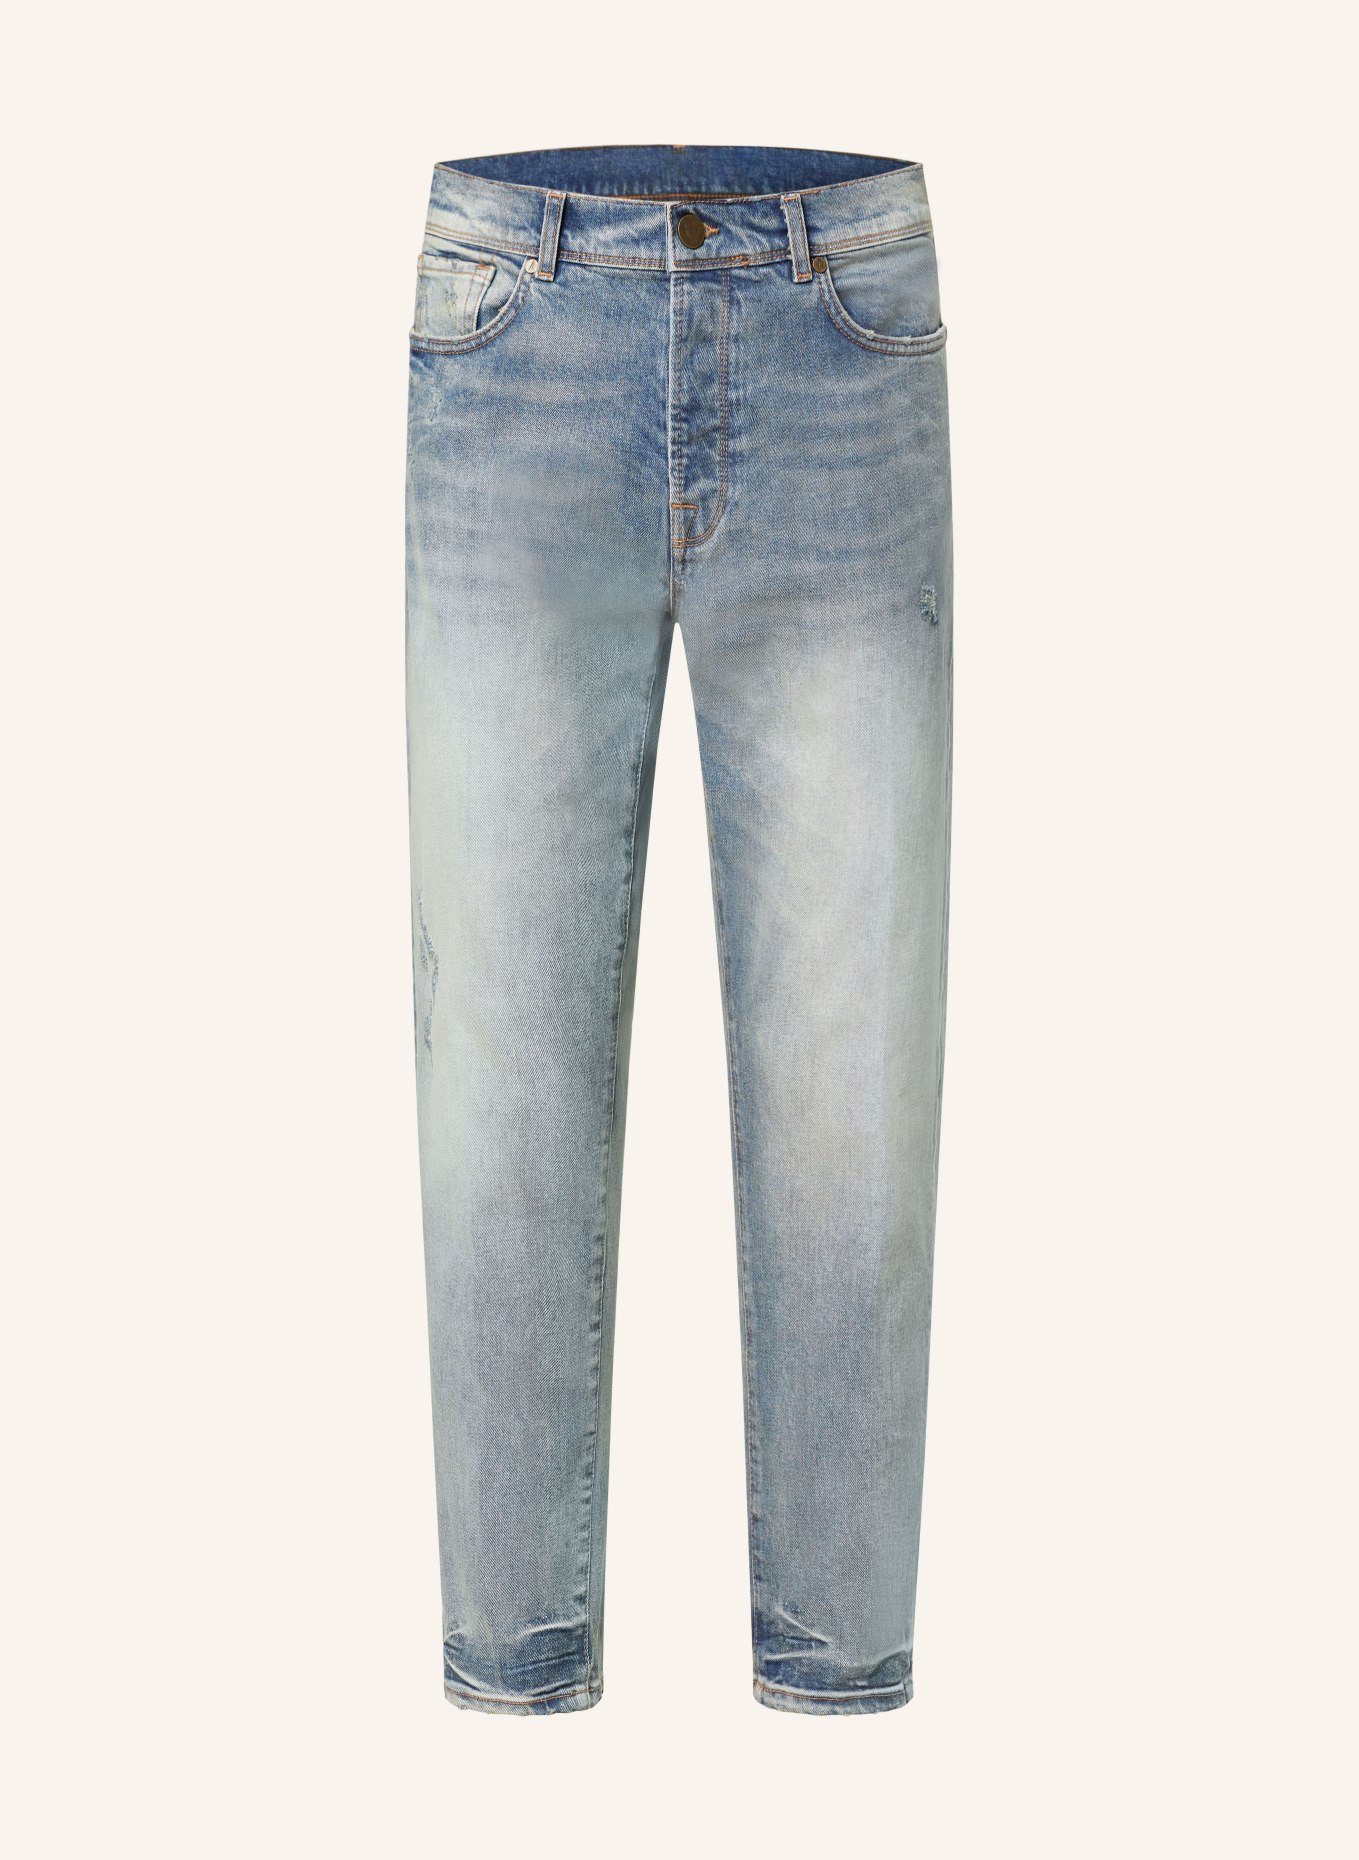 GOLDGARN DENIM Jeans RHEINAU Relaxed Cropped Fit, Farbe: 1010 Vintageblue (Bild 1)